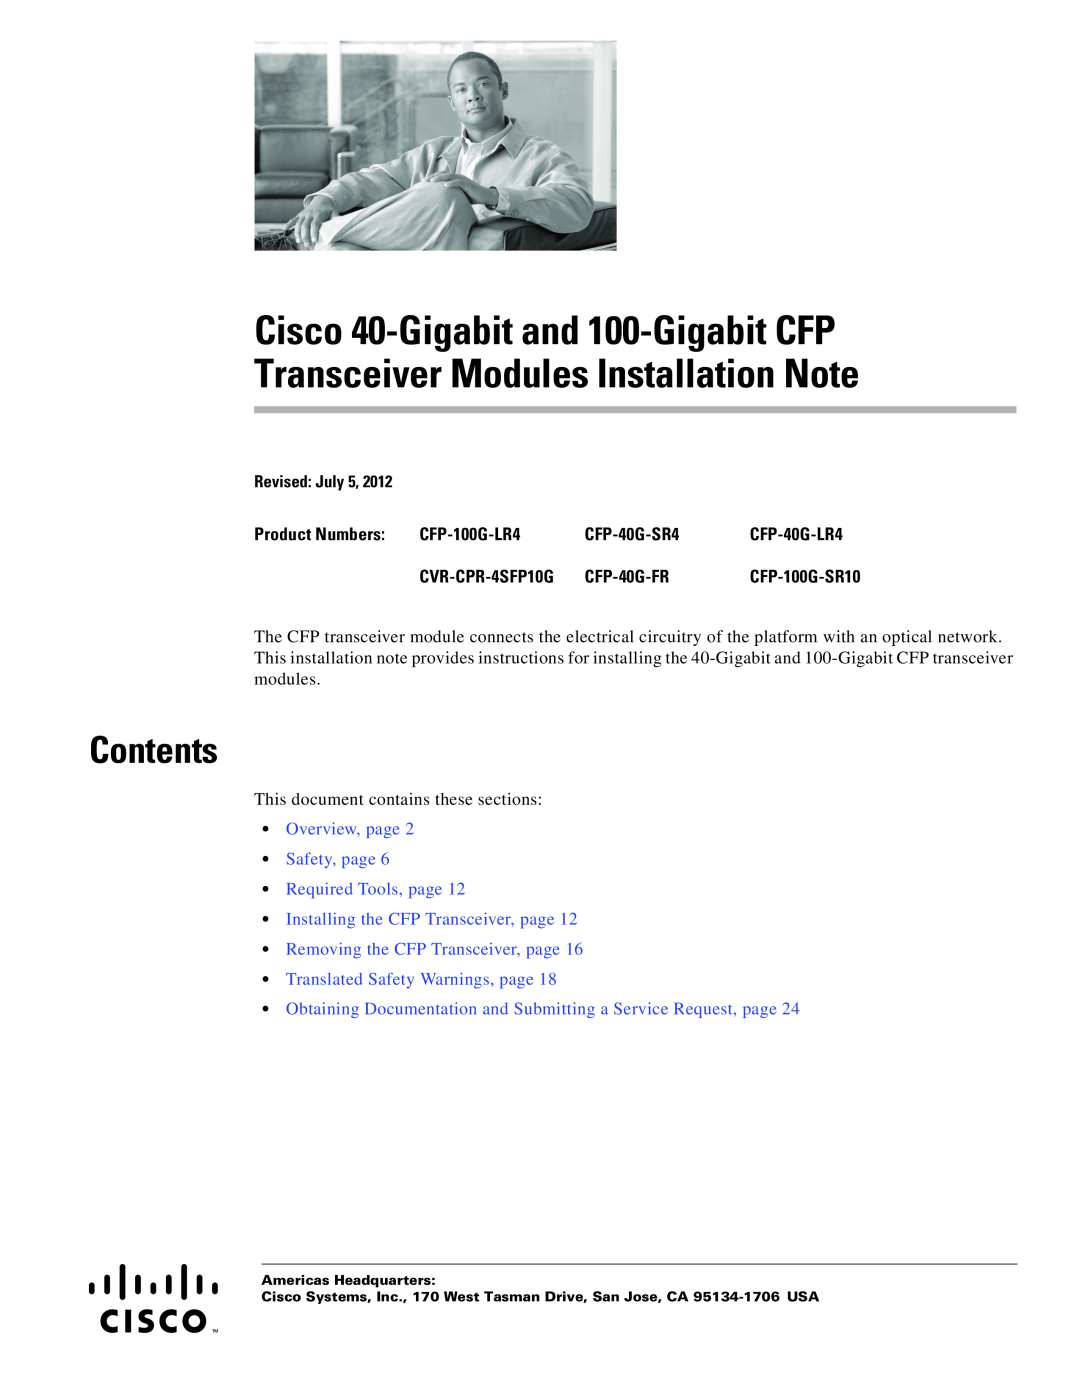 Cisco Systems CFP-40G-SR4 manual Contents, Cisco 40-Gigabit and 100-Gigabit CFP, Transceiver Modules Installation Note 